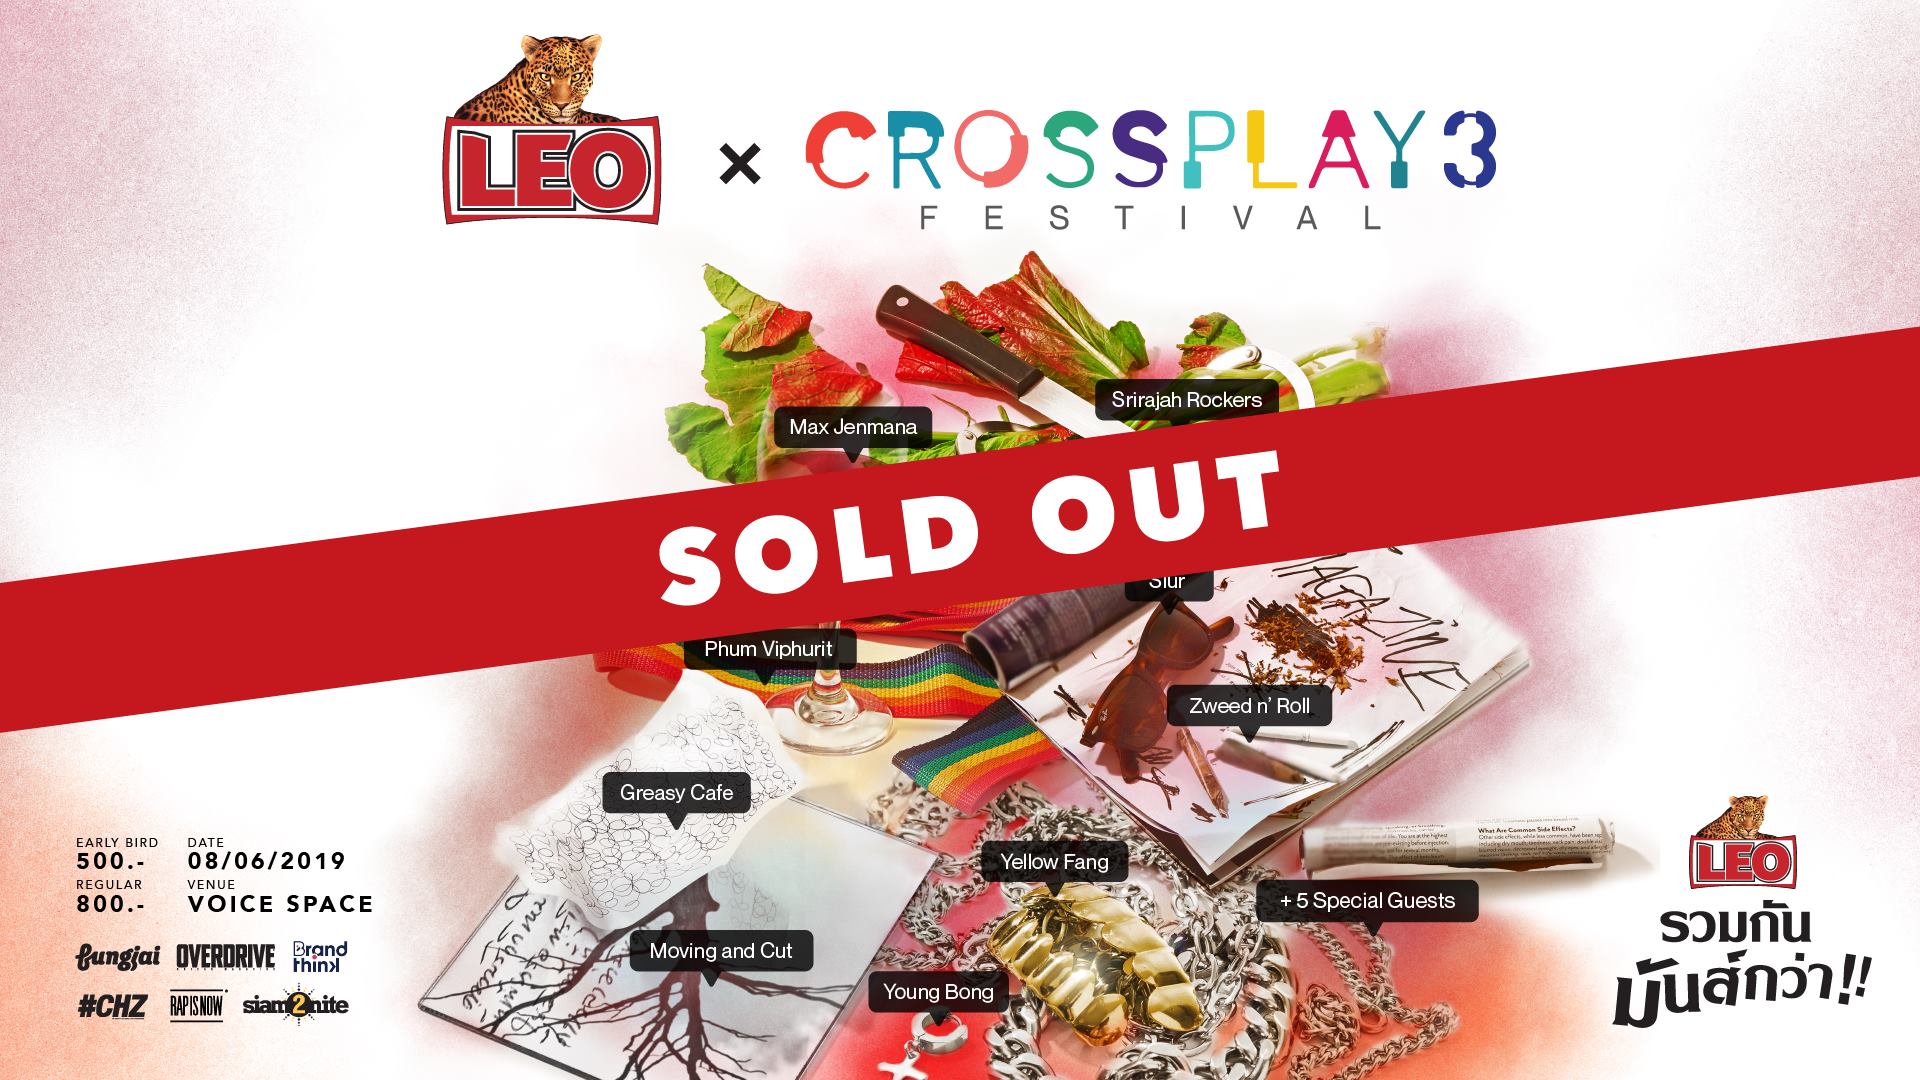 LEO x Crossplay 3 Festival SOLD OUT ขายหมดเกลี้ยงแล้วจ้า #หน้างานก็ไม่มีขายนะ